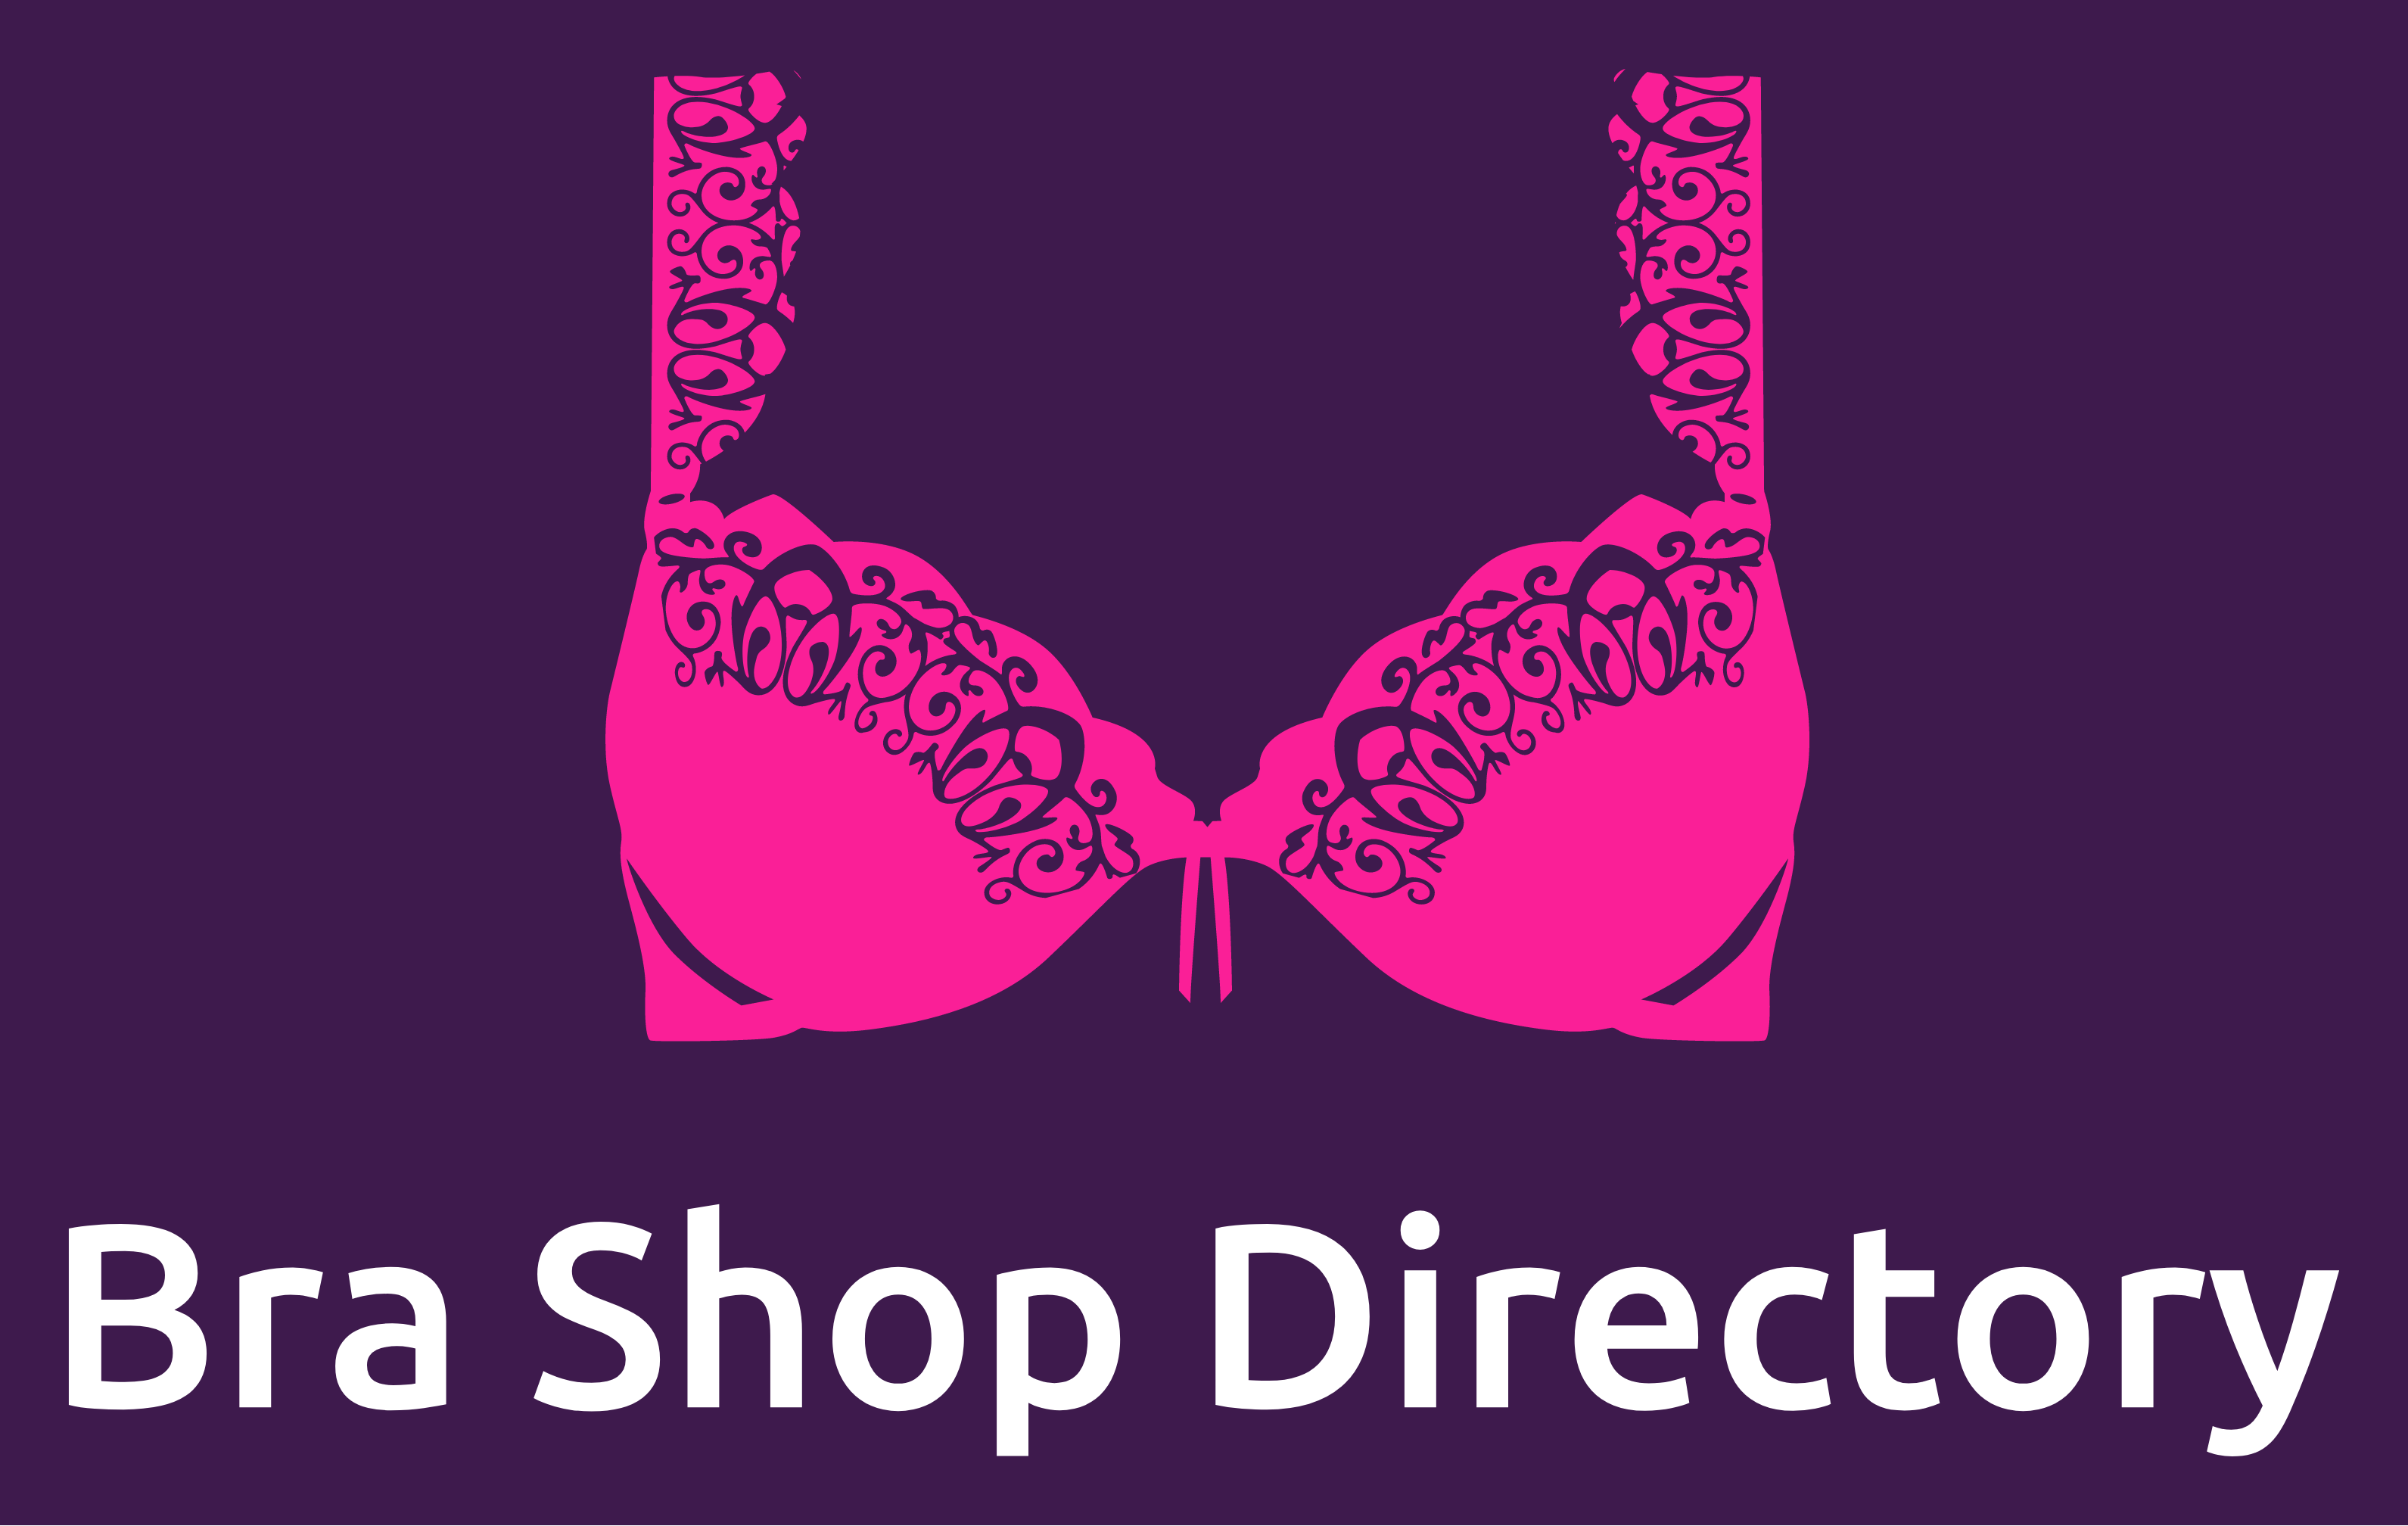 Bra Shop Directory - Pink and Purple logo